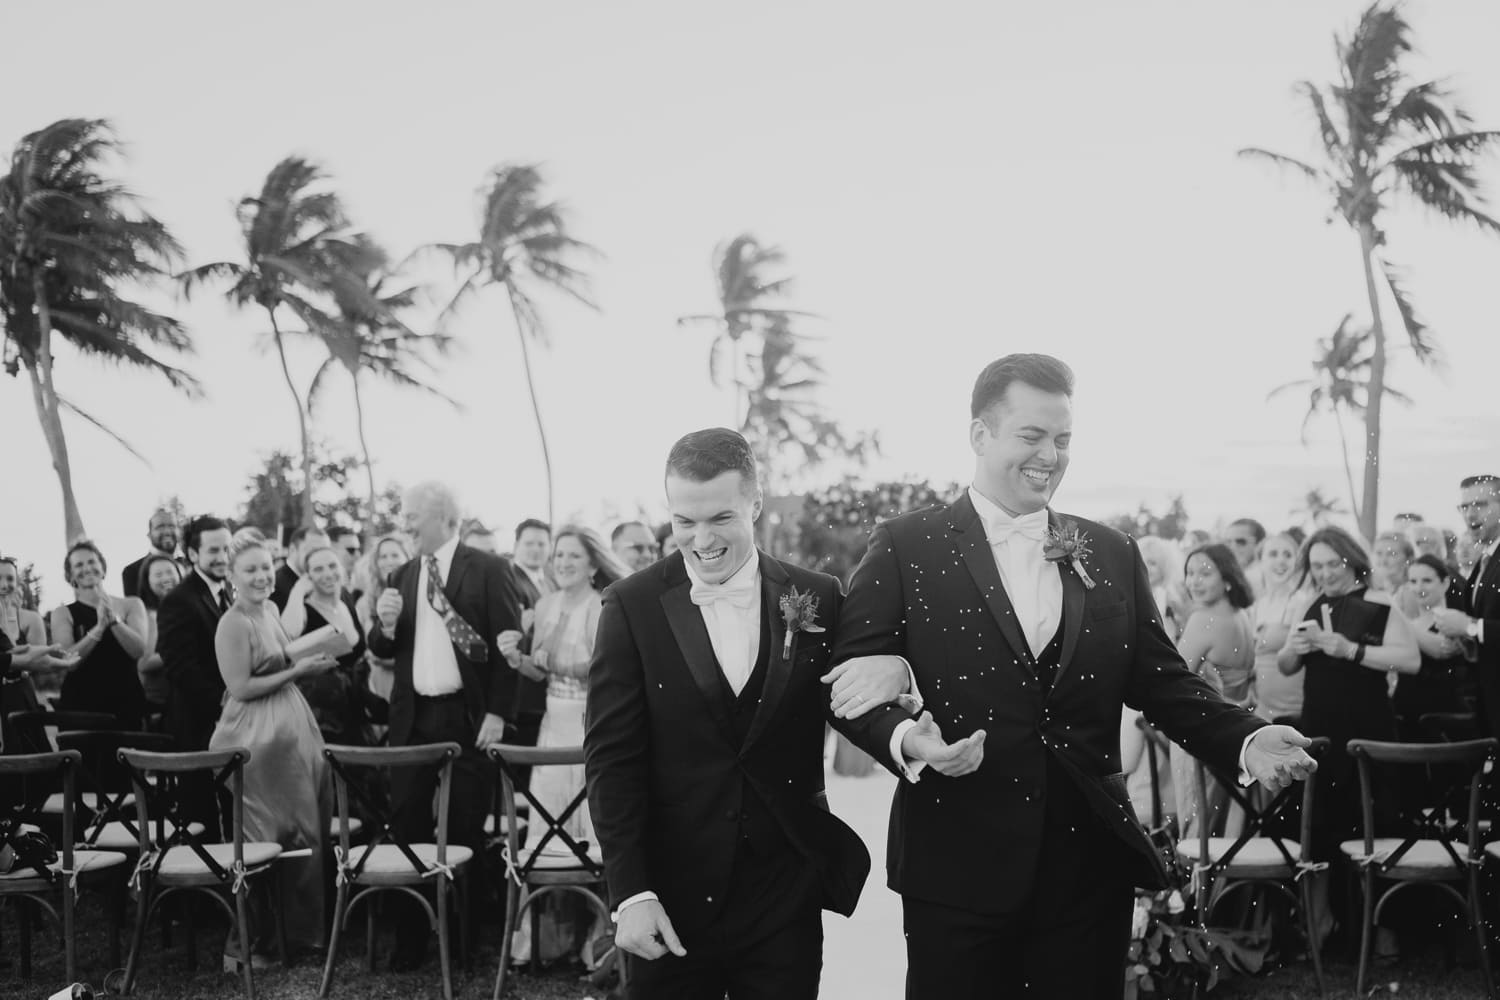 hilton ponce golf and casino wedding photography in puerto rico fotografia de boda